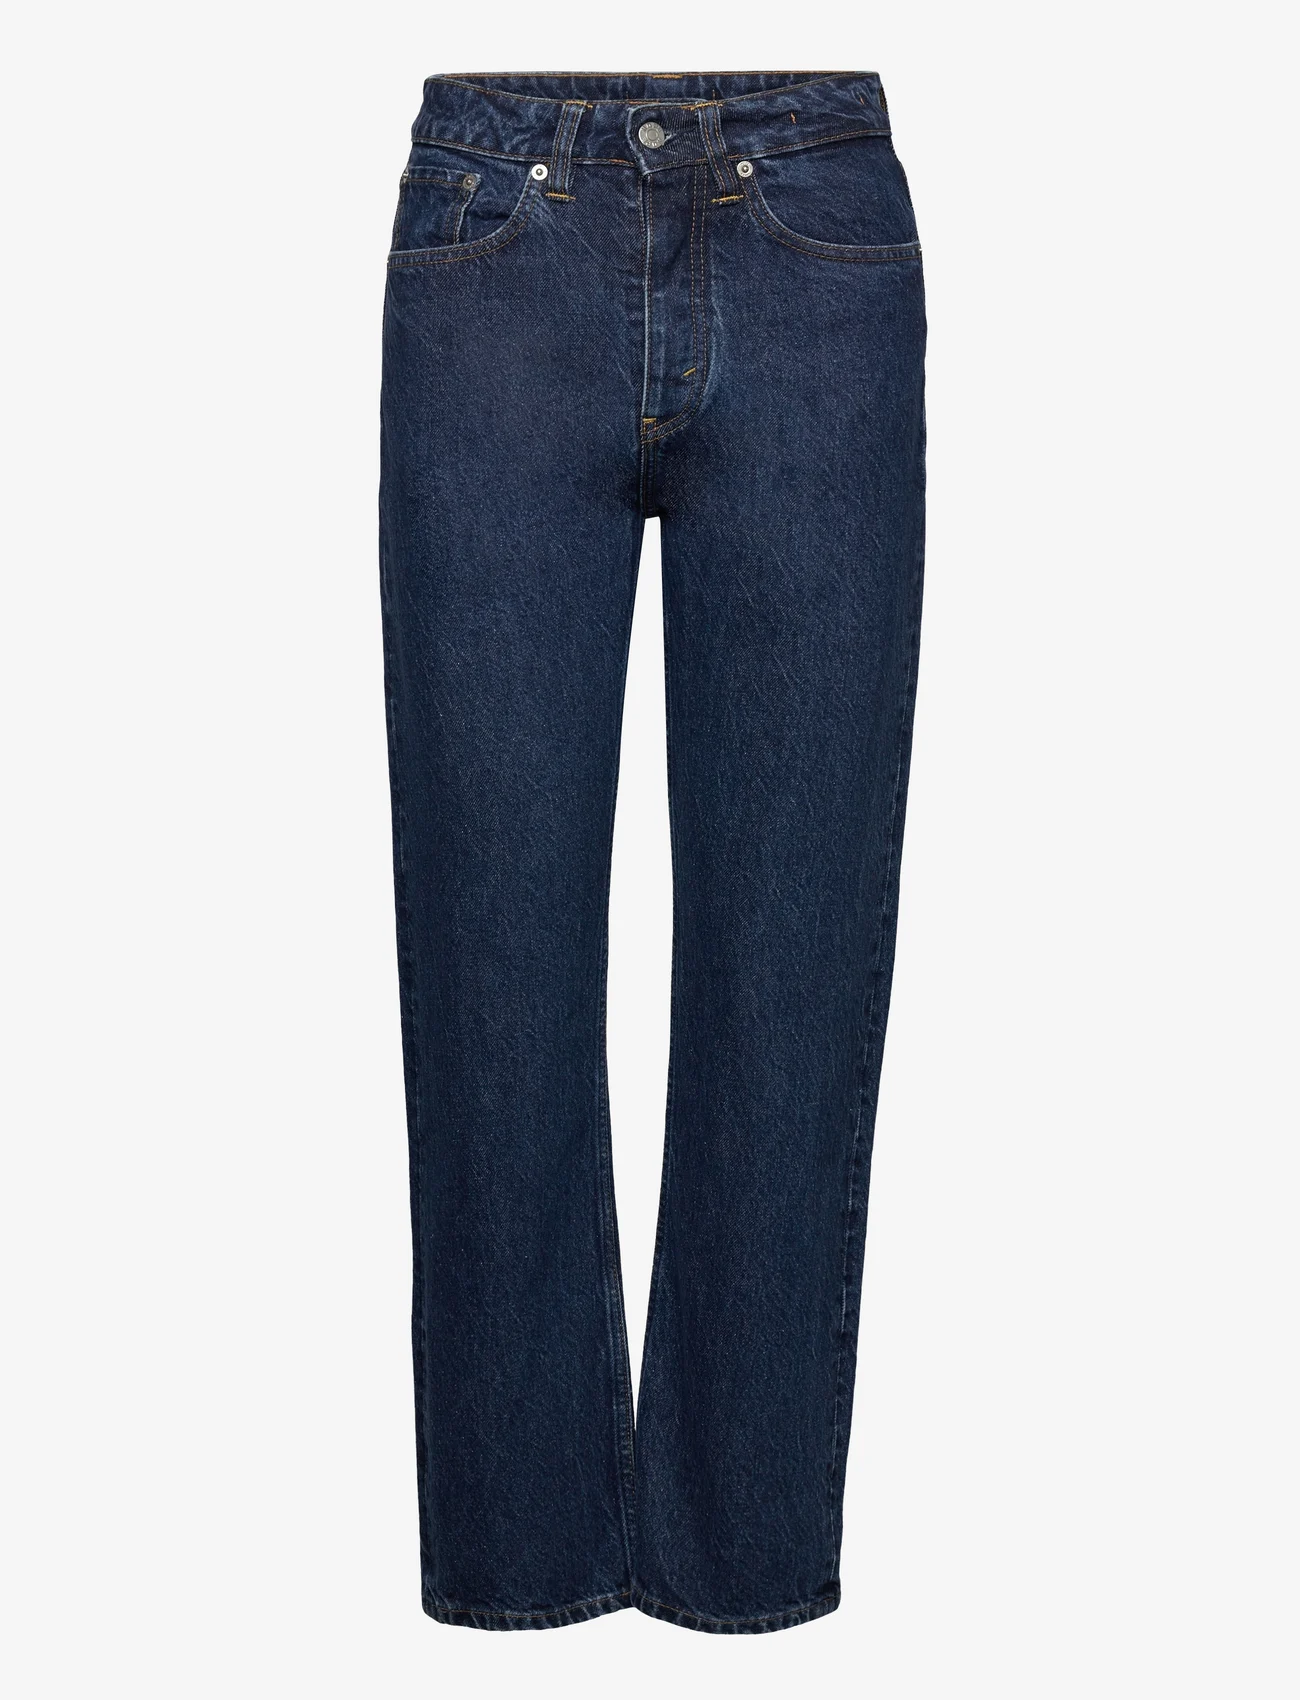 Hope - Slim High-Rise Jeans - proste dżinsy - dk indigo wash - 0